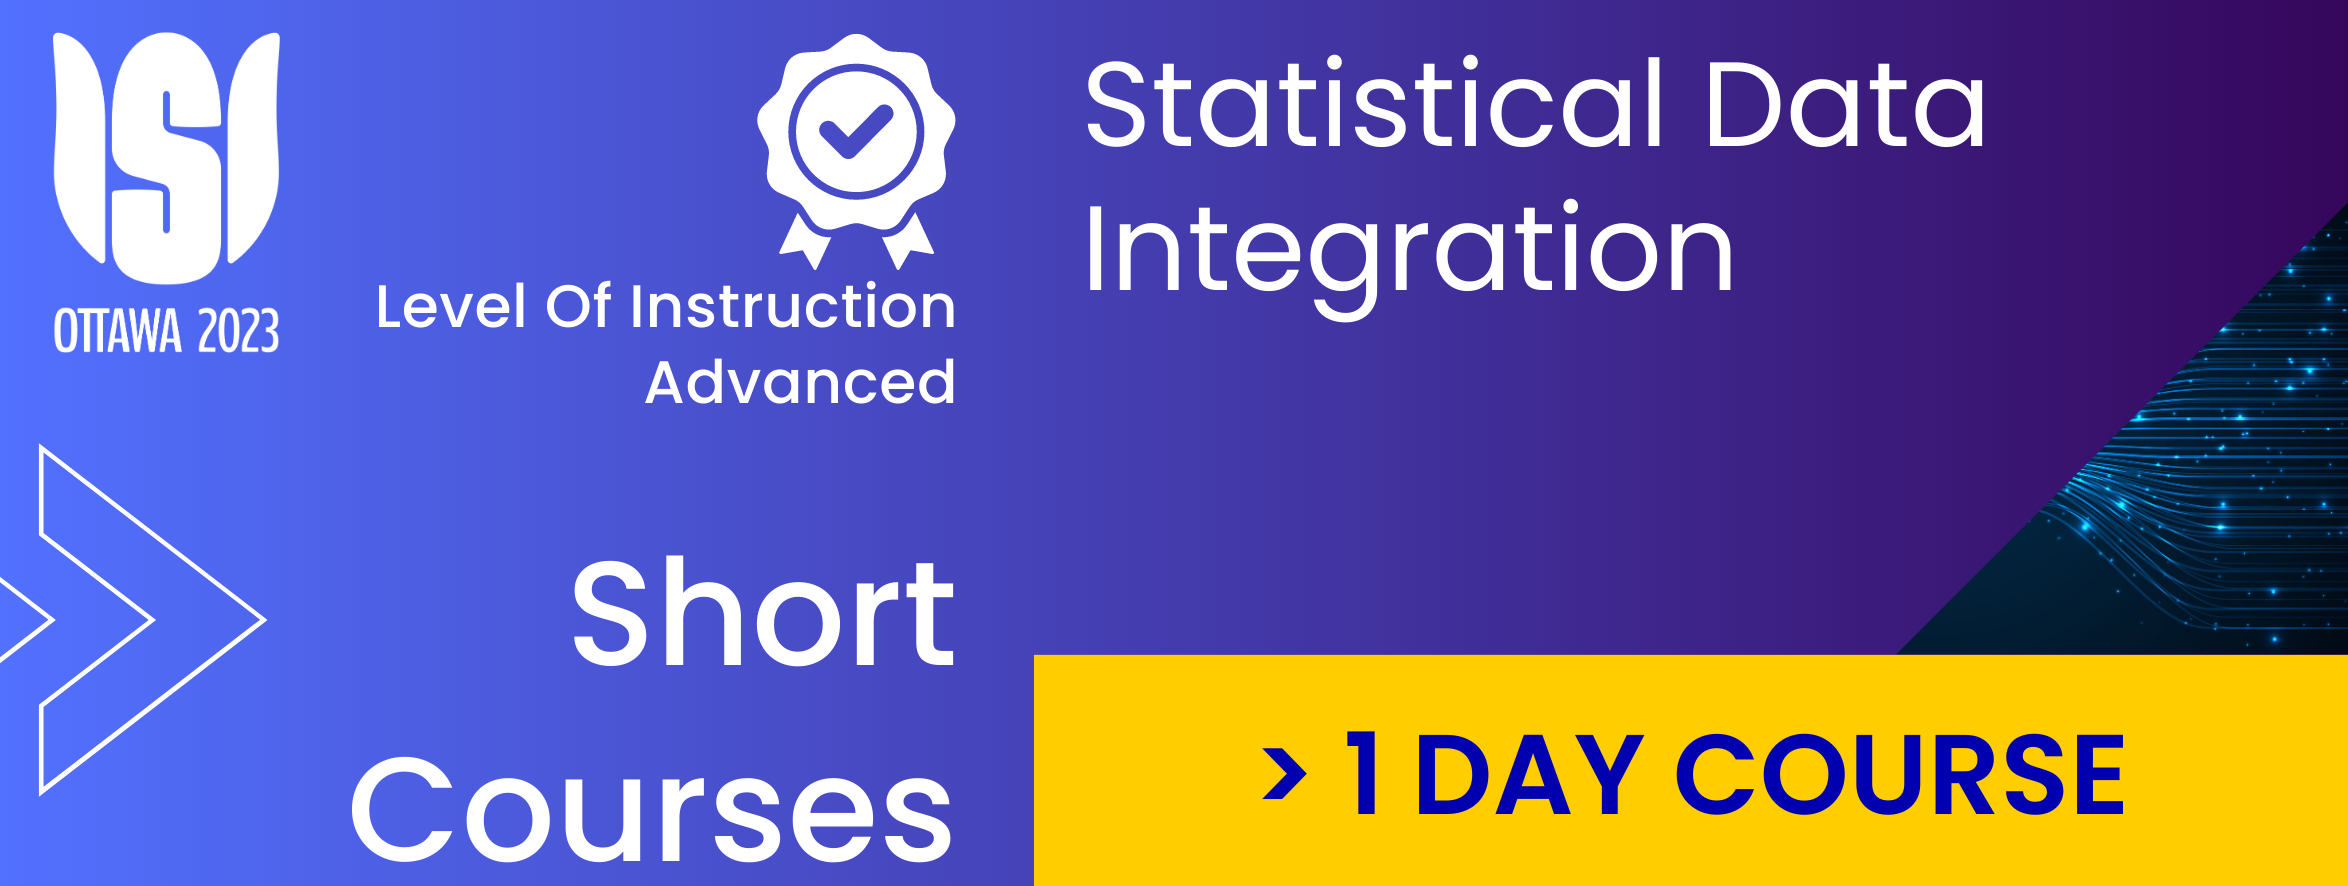 Statistical Data Integration